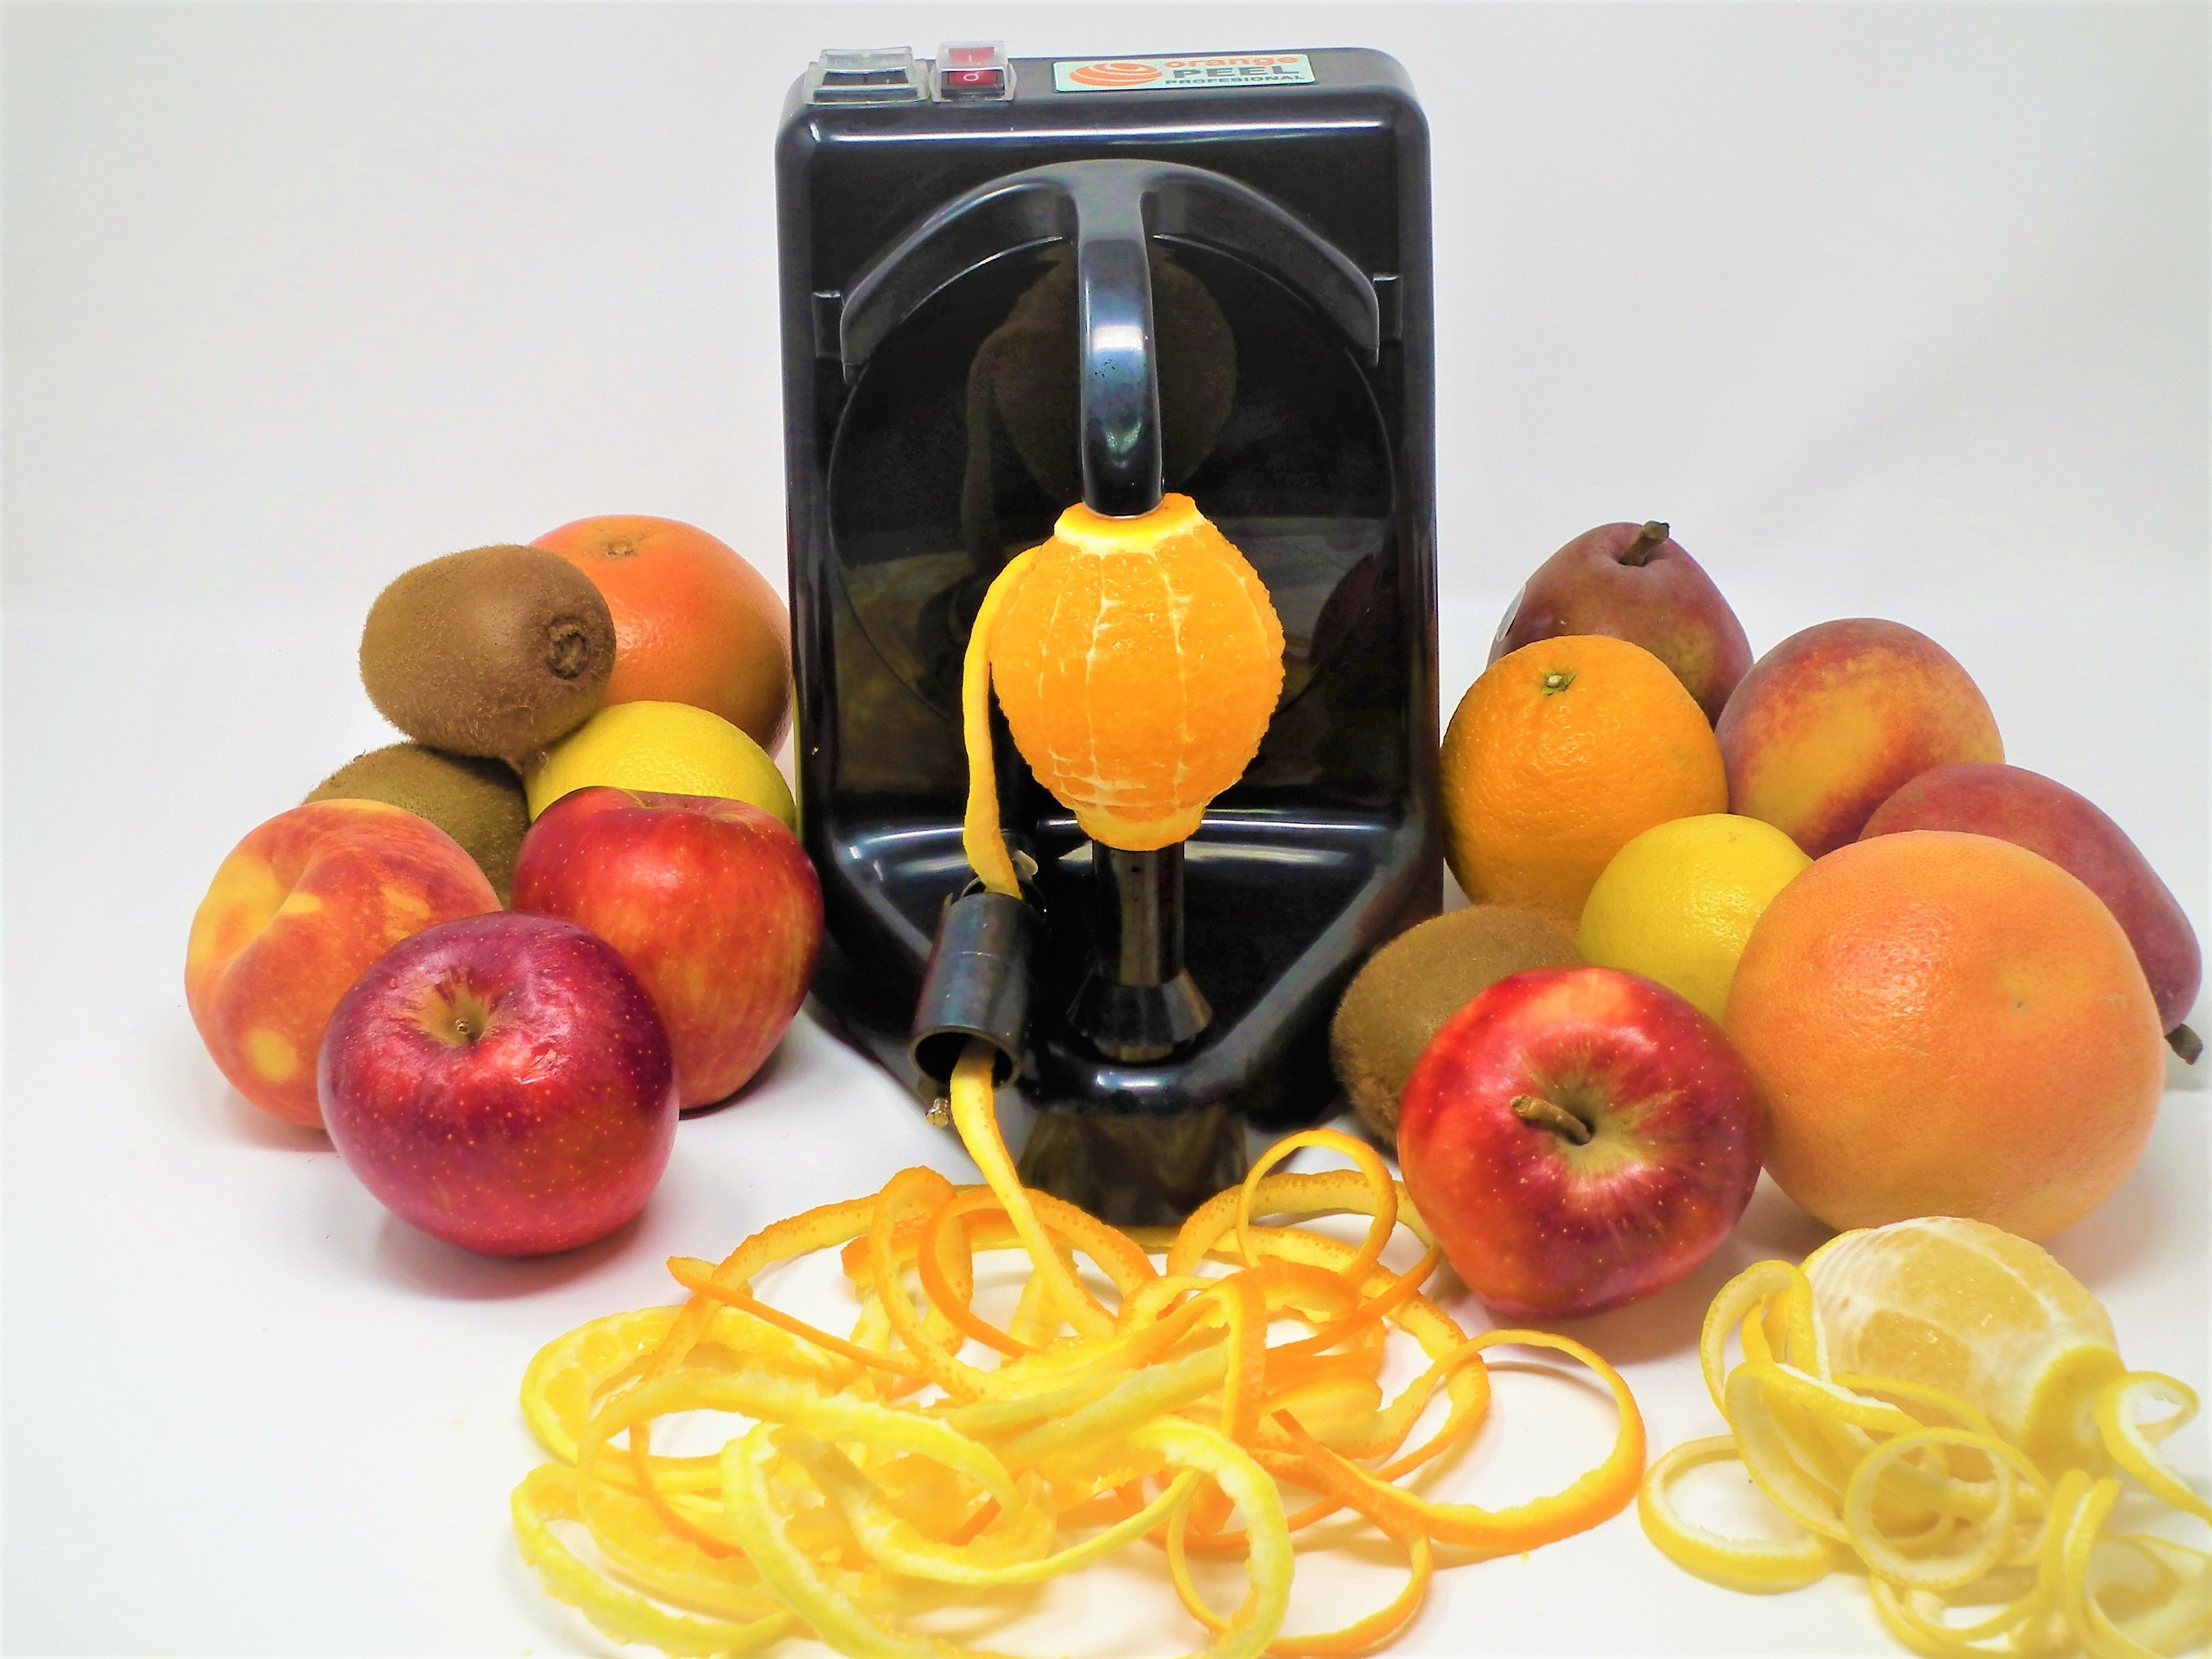 Electric Fruit Peeler